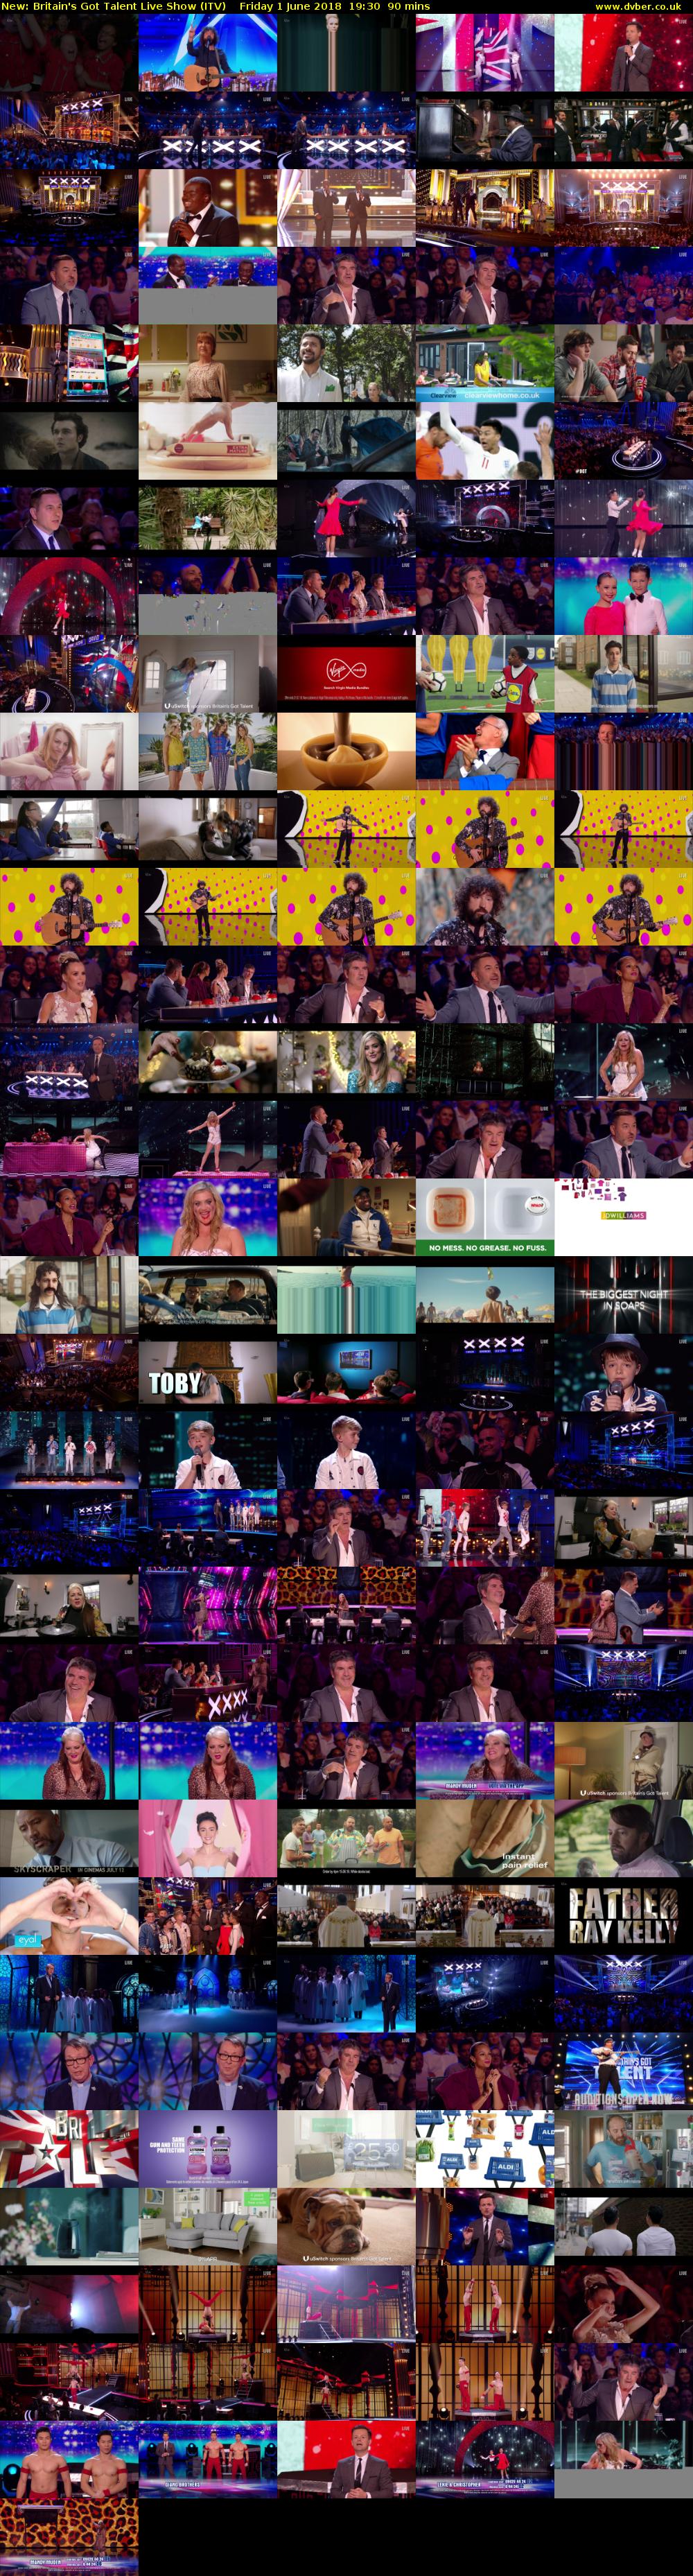 Britain's Got Talent Live Show (ITV) Friday 1 June 2018 19:30 - 21:00